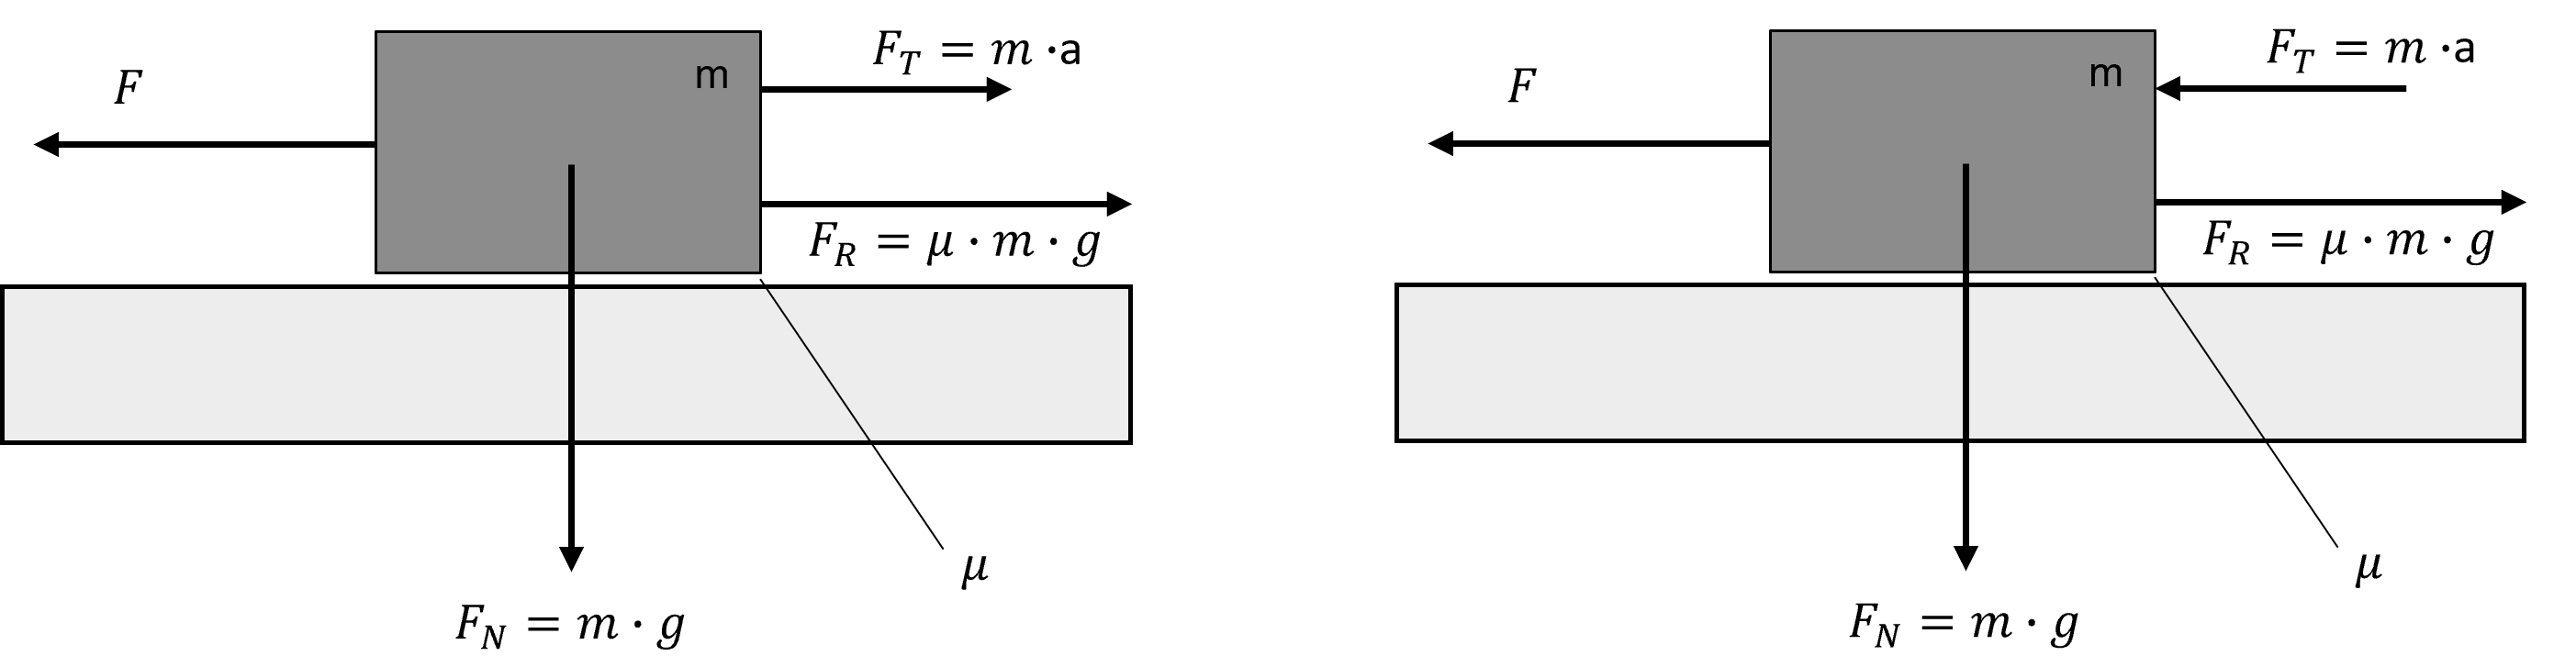 Kräfte an einer horizontal bewegten Masse (links: Beschleunigung, rechts: Verzögerung)